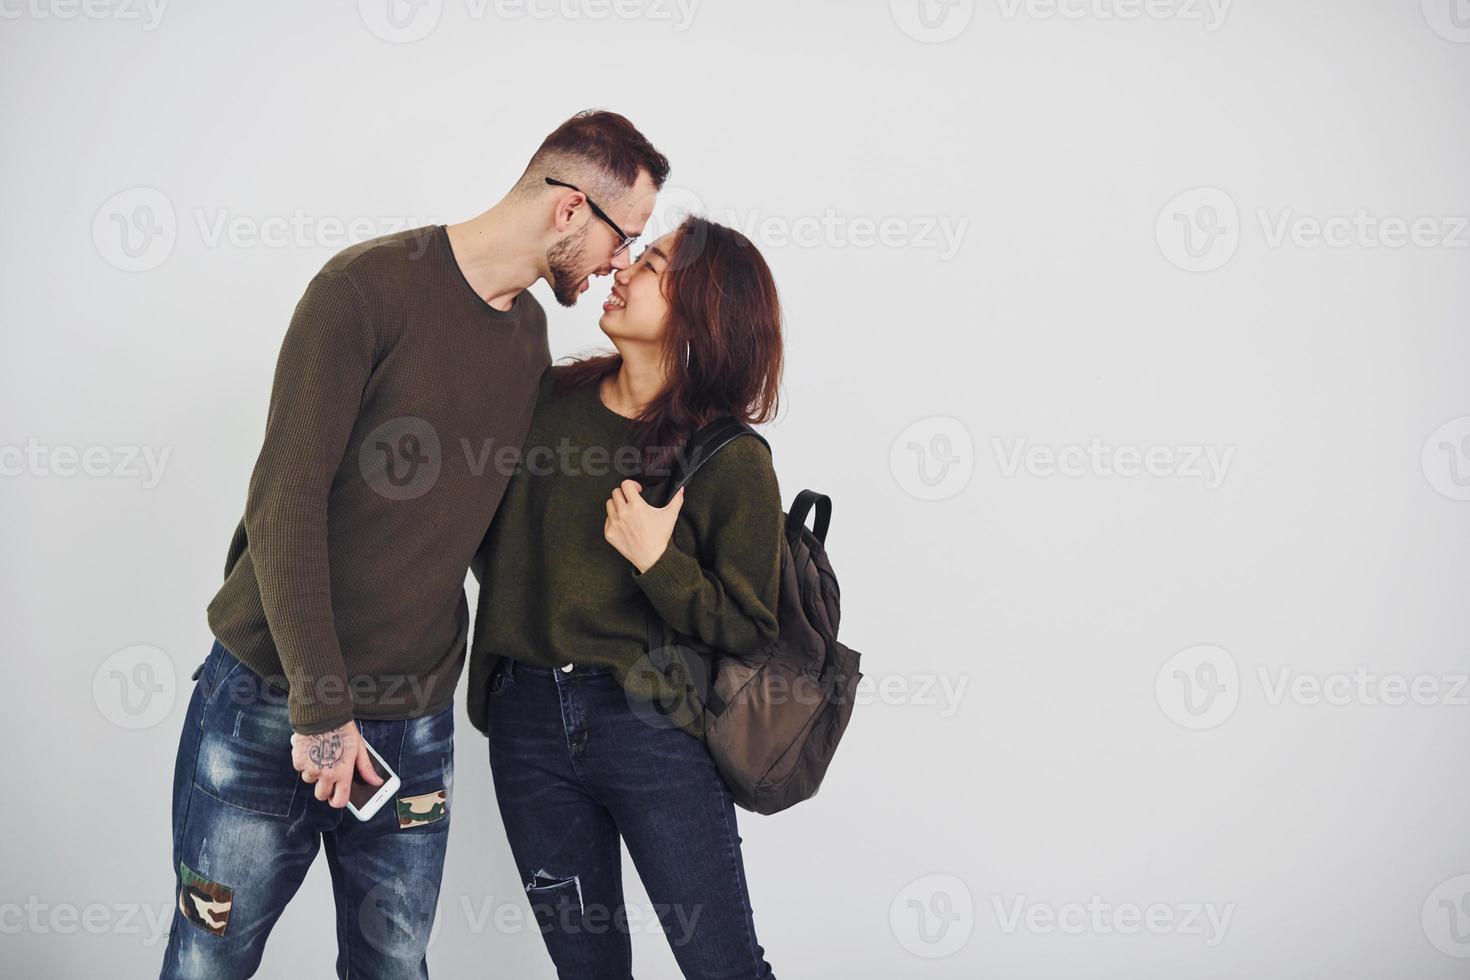 alegre casal multiétnico com mochila e telefone juntos dentro de casa no estúdio contra fundo branco foto